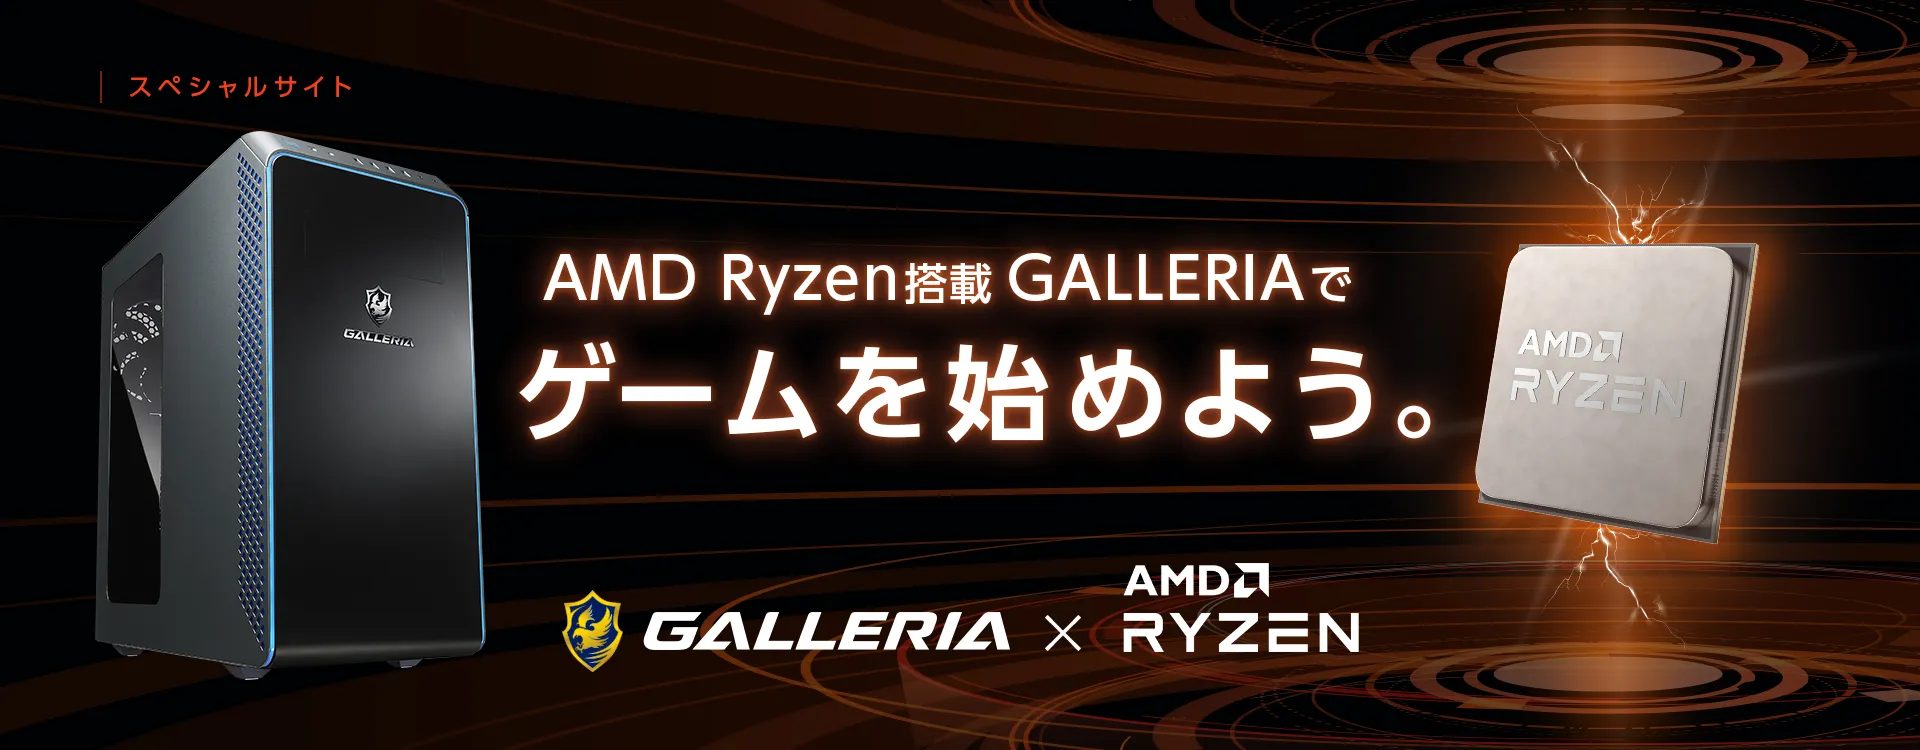 GALLERIA × AMD Ryzen スペシャルサイト